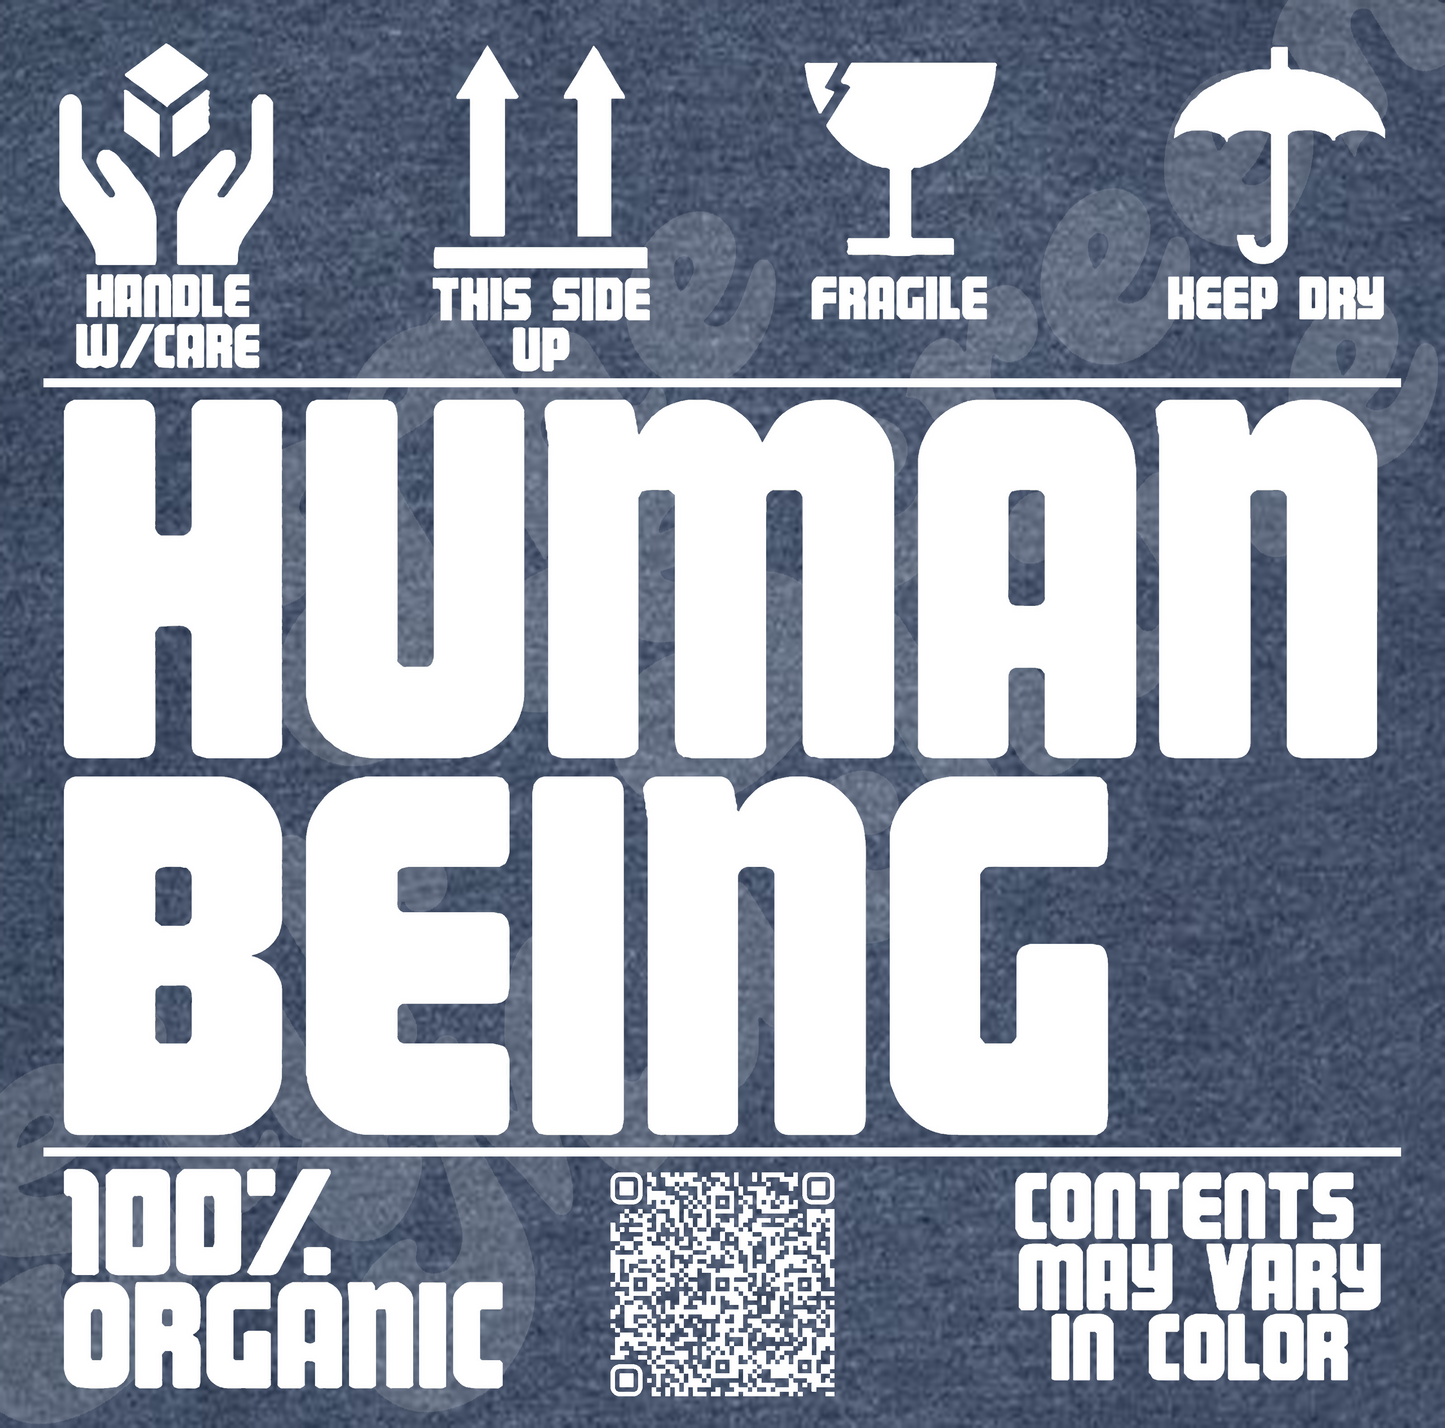 Human Being T-shirt 🙋🏽‍♂️ Global Shipping Label